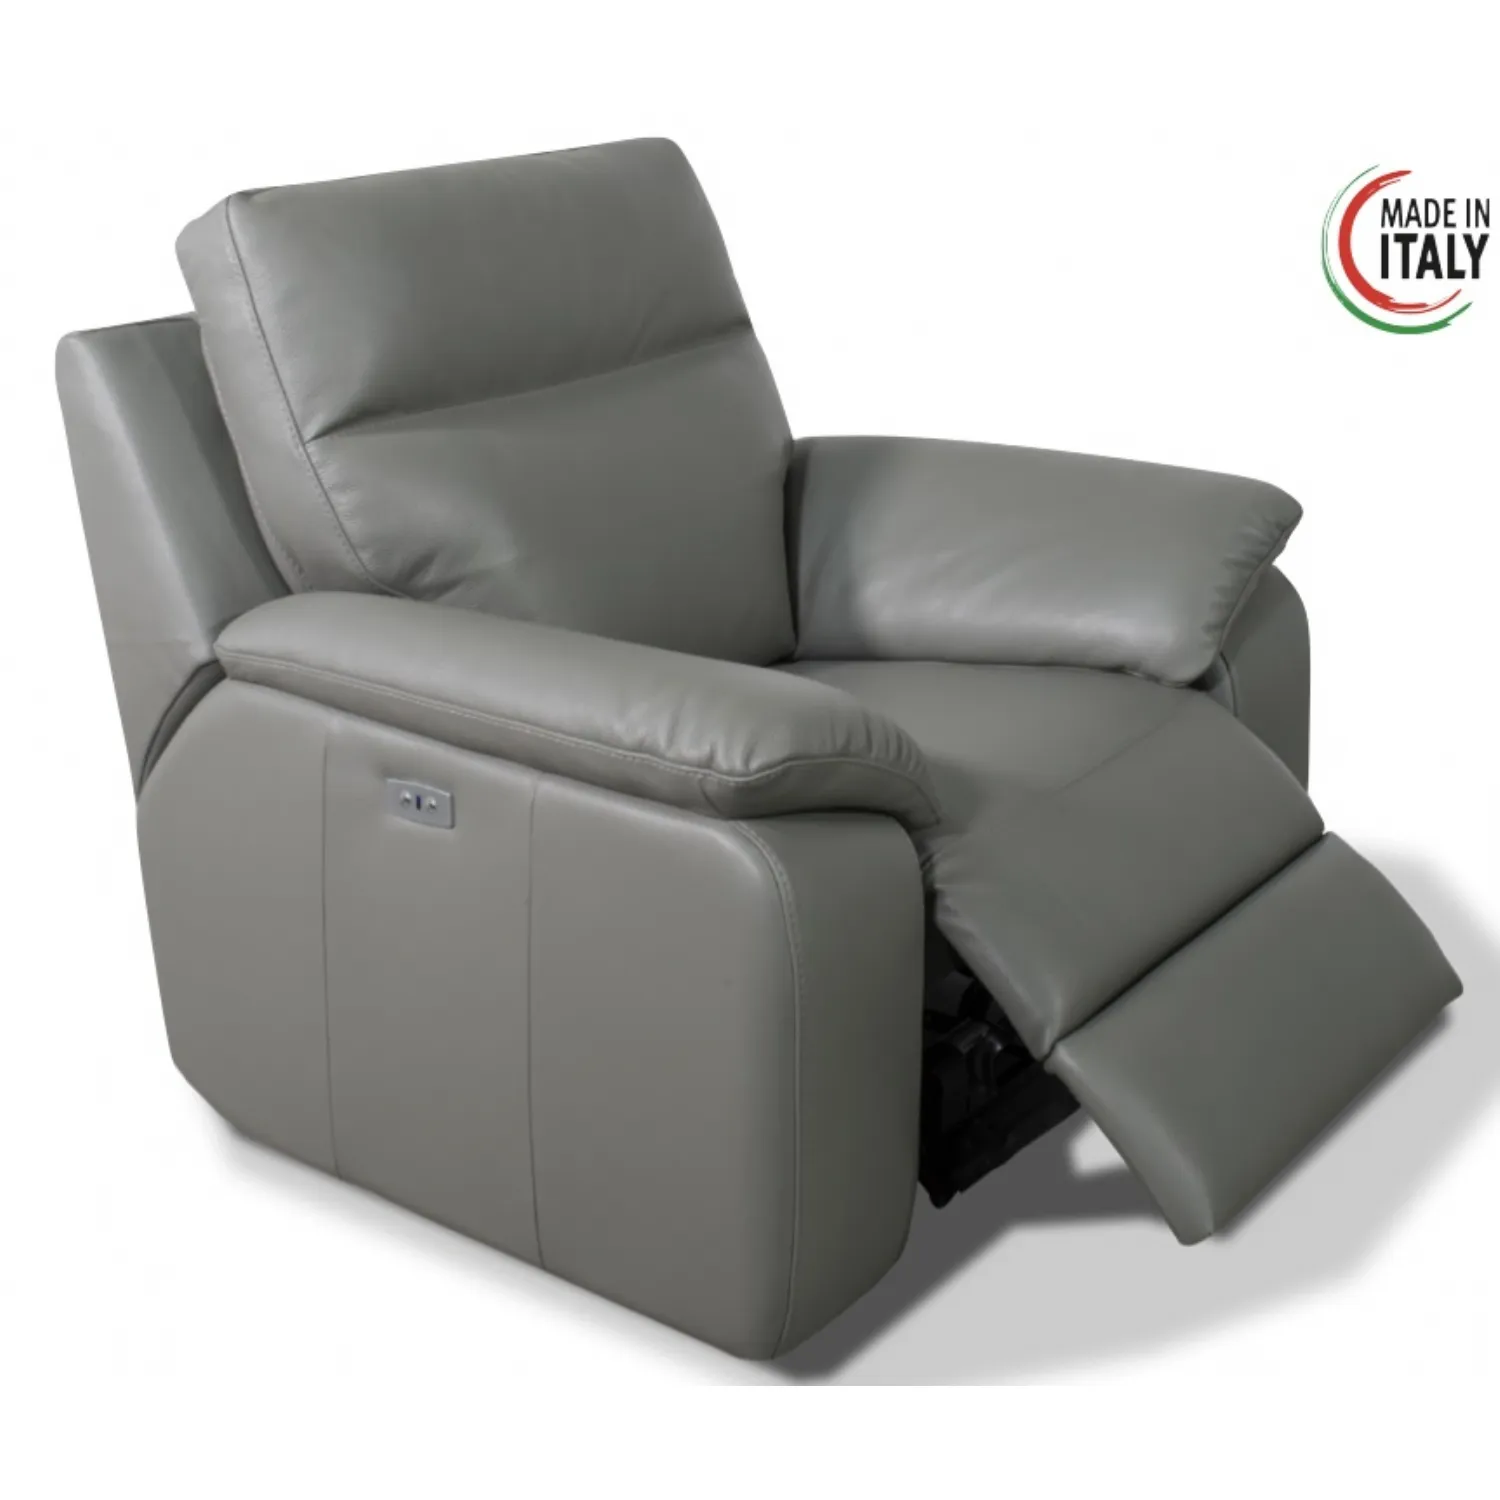 Full Italian Leather 1 Seat Electric Reclining Armchair